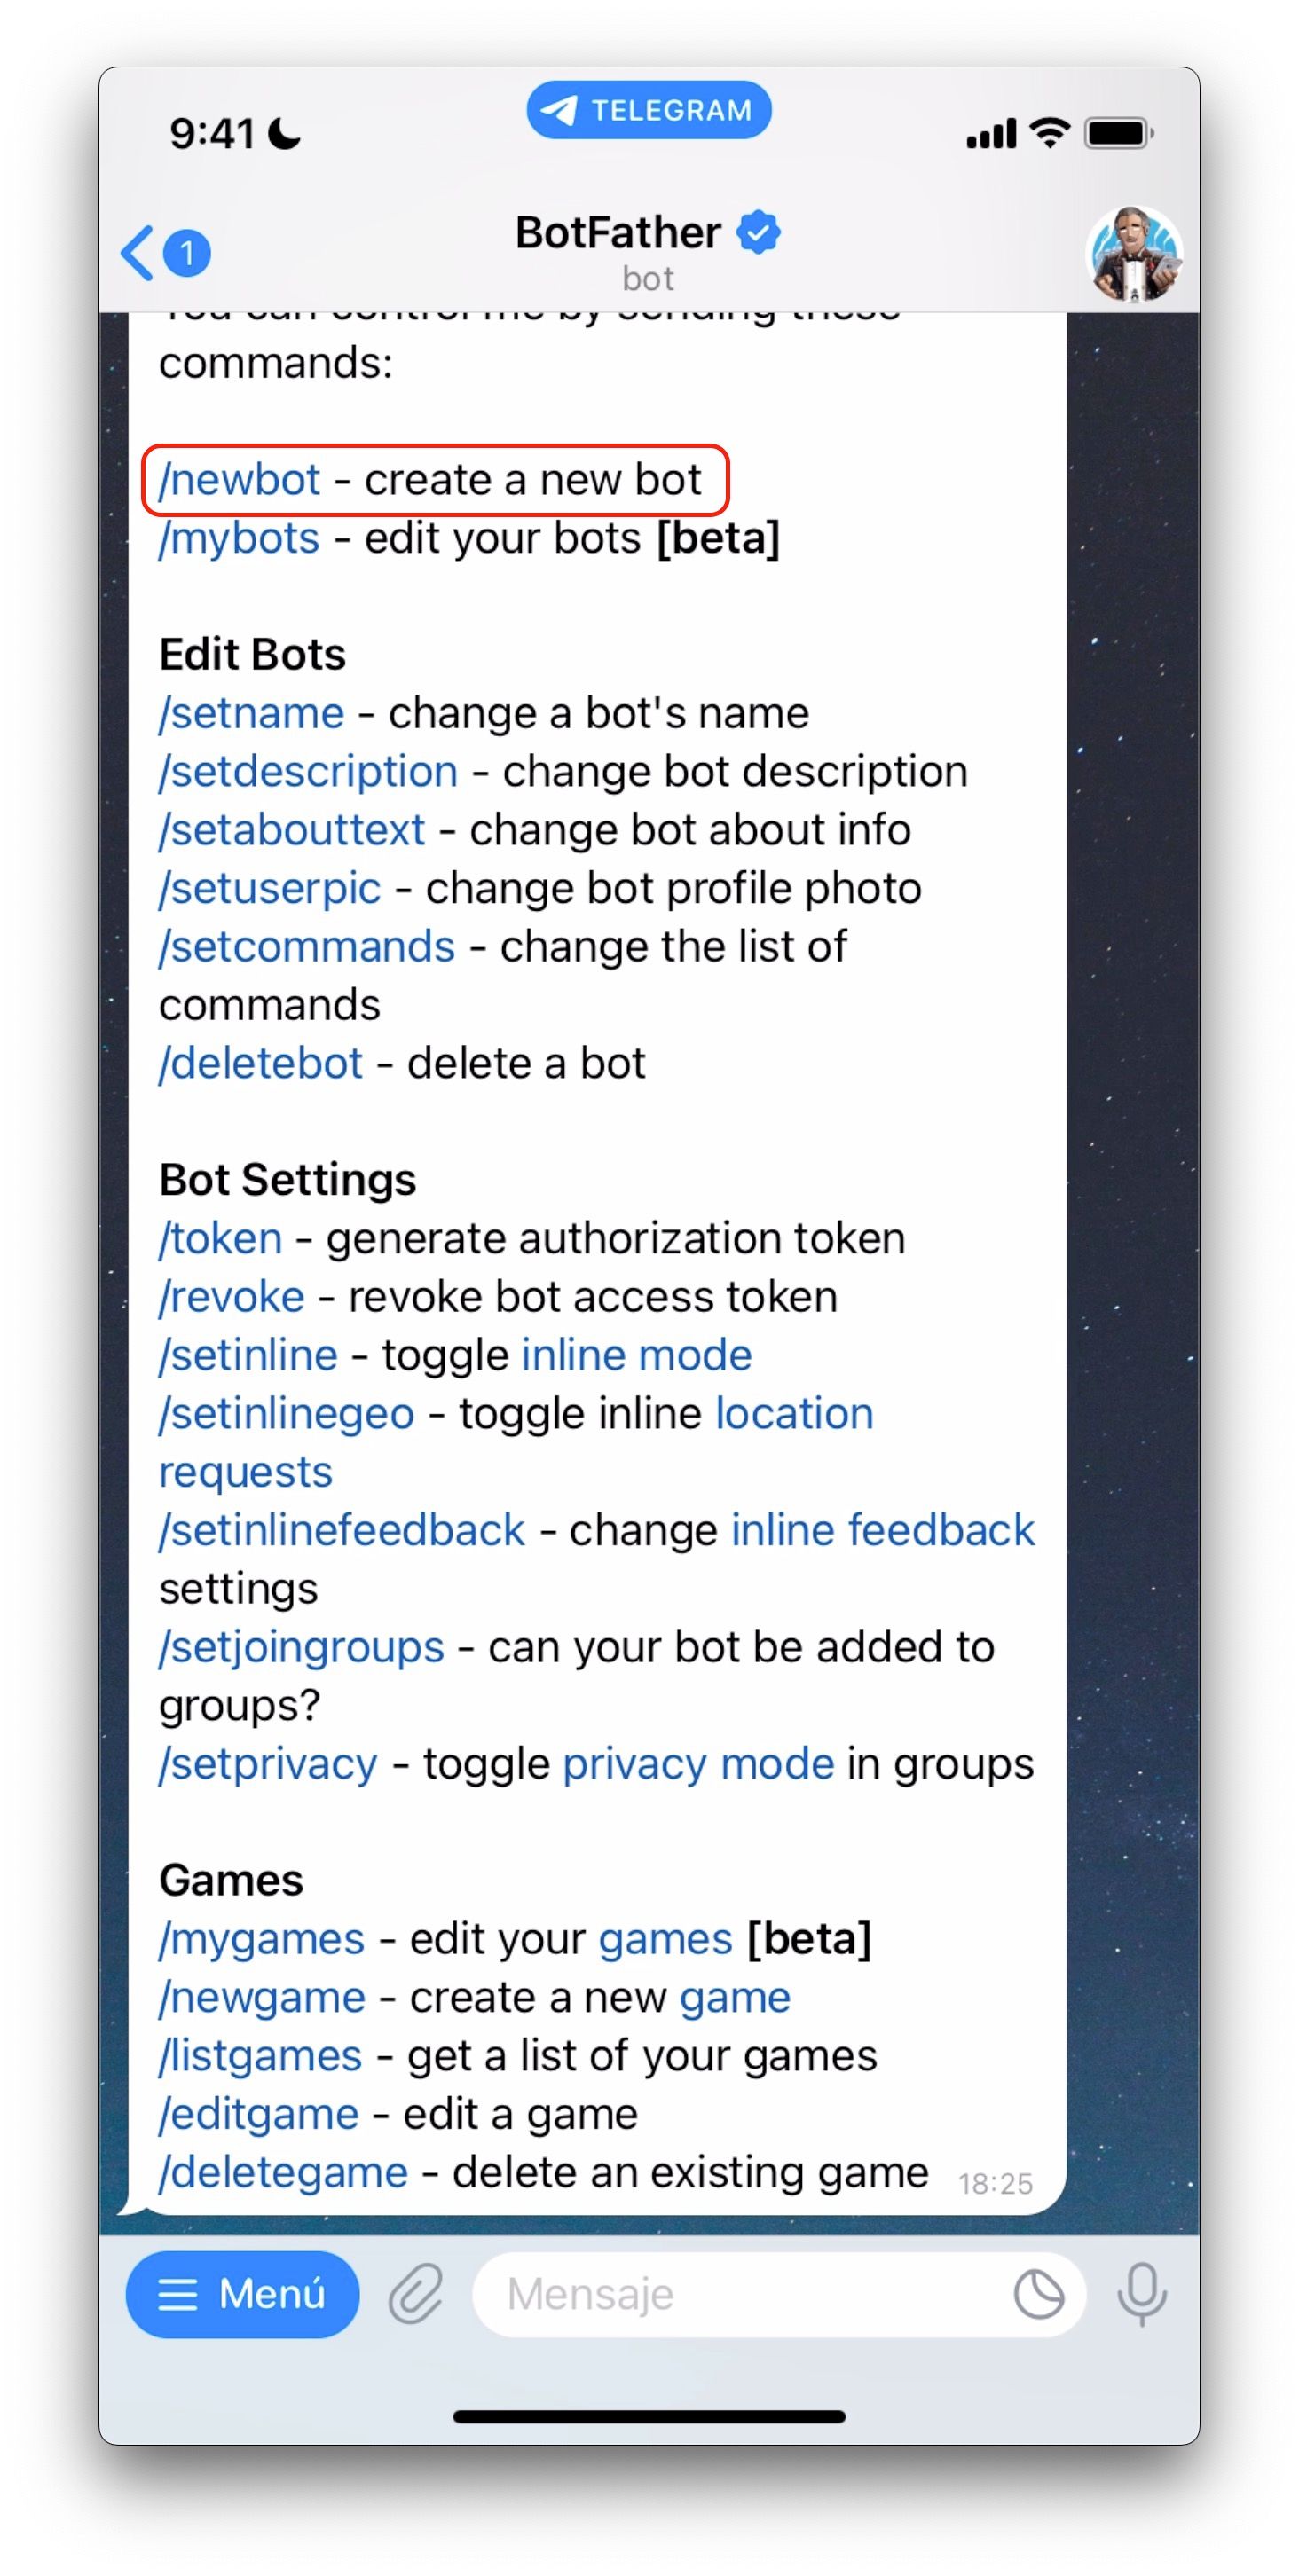 Conversación inicial con @botfather para crear nuevo bot